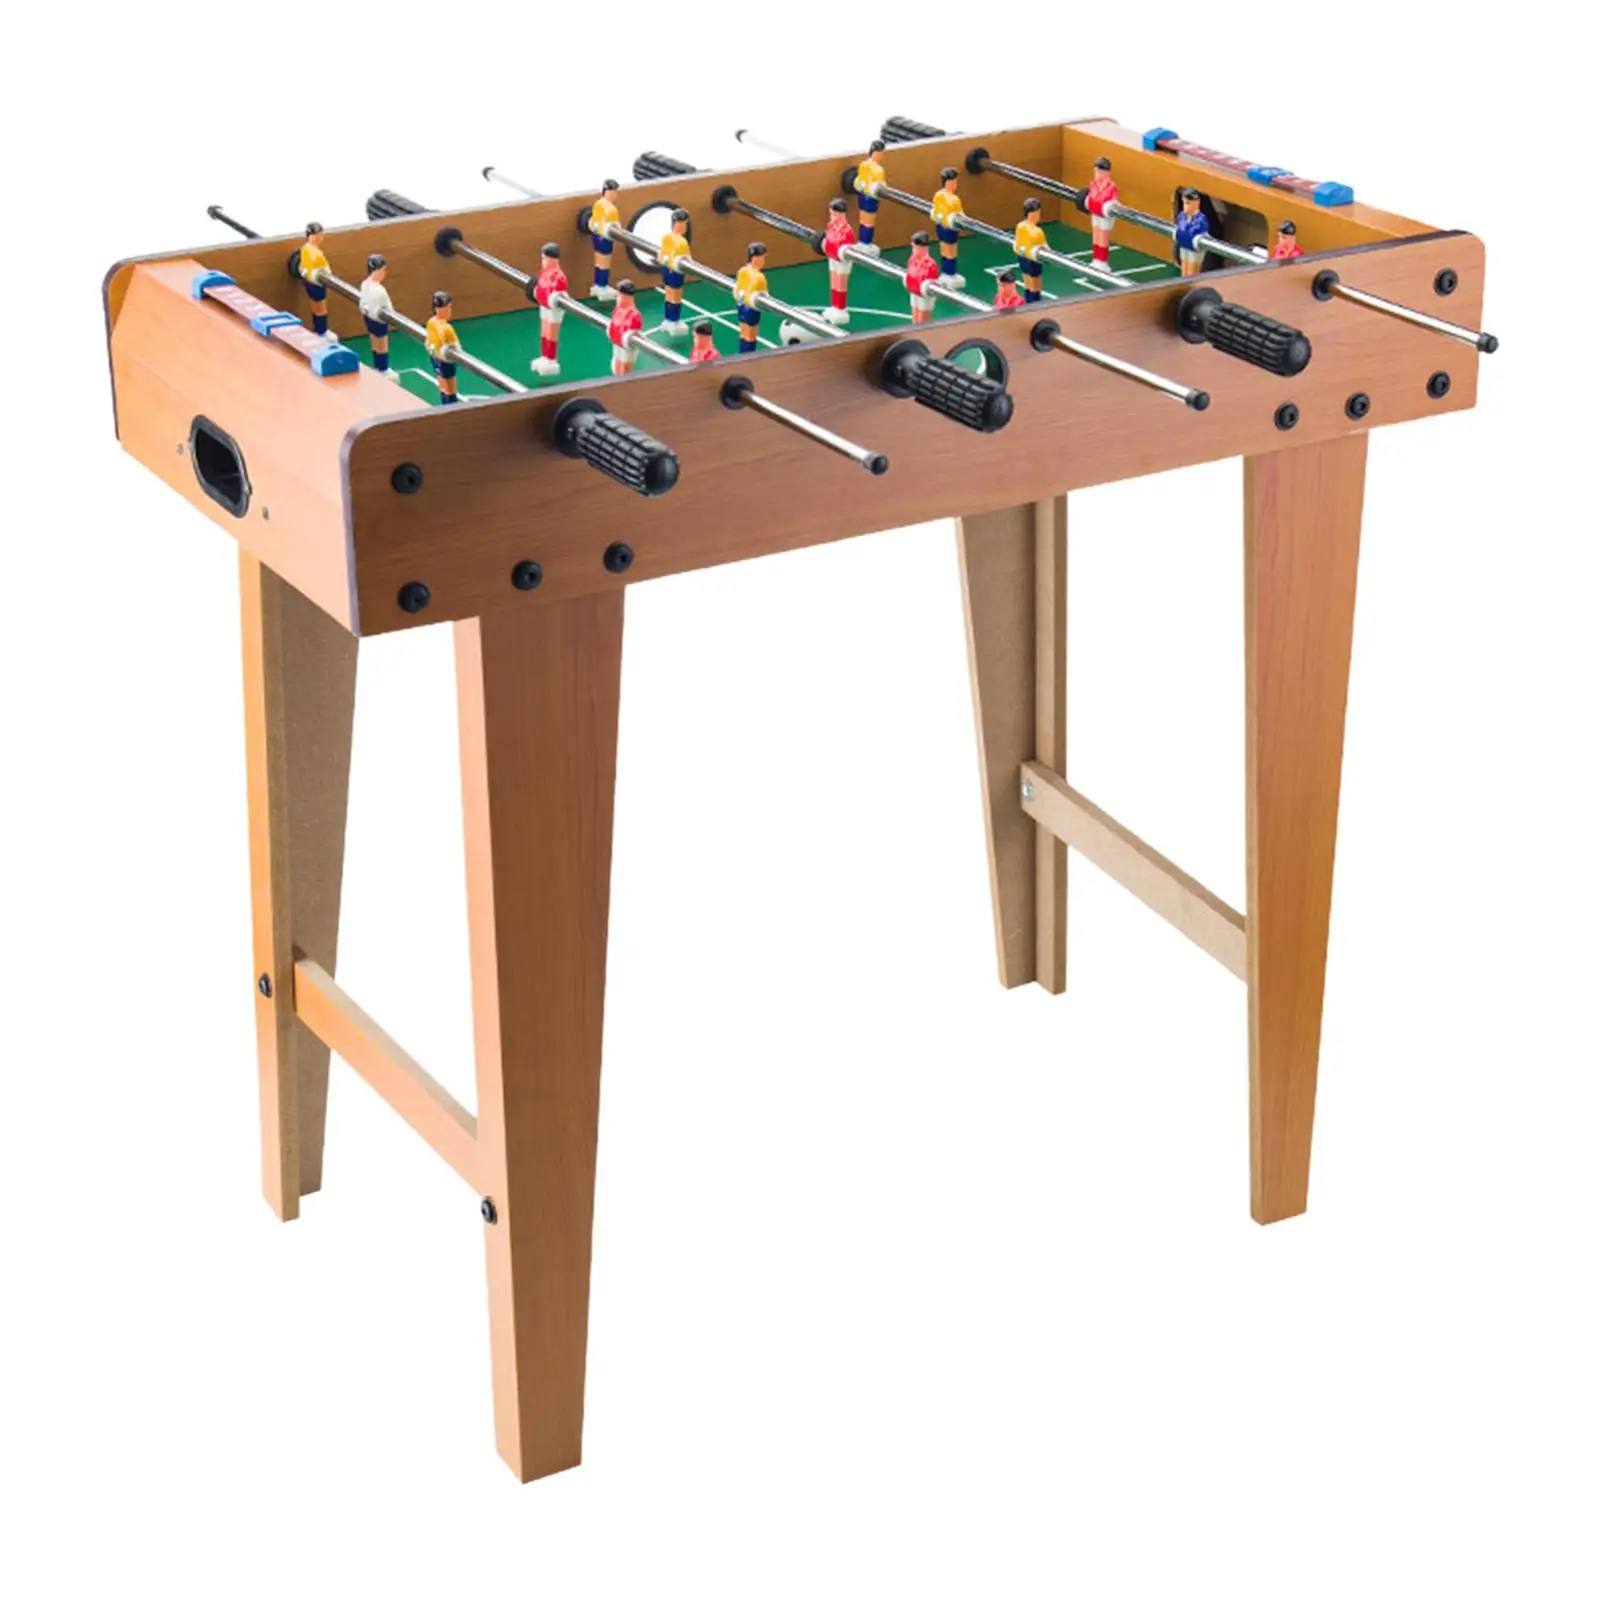 Wood Foosball Table Sports Tabletop Football Game Desktop Game for Indoor